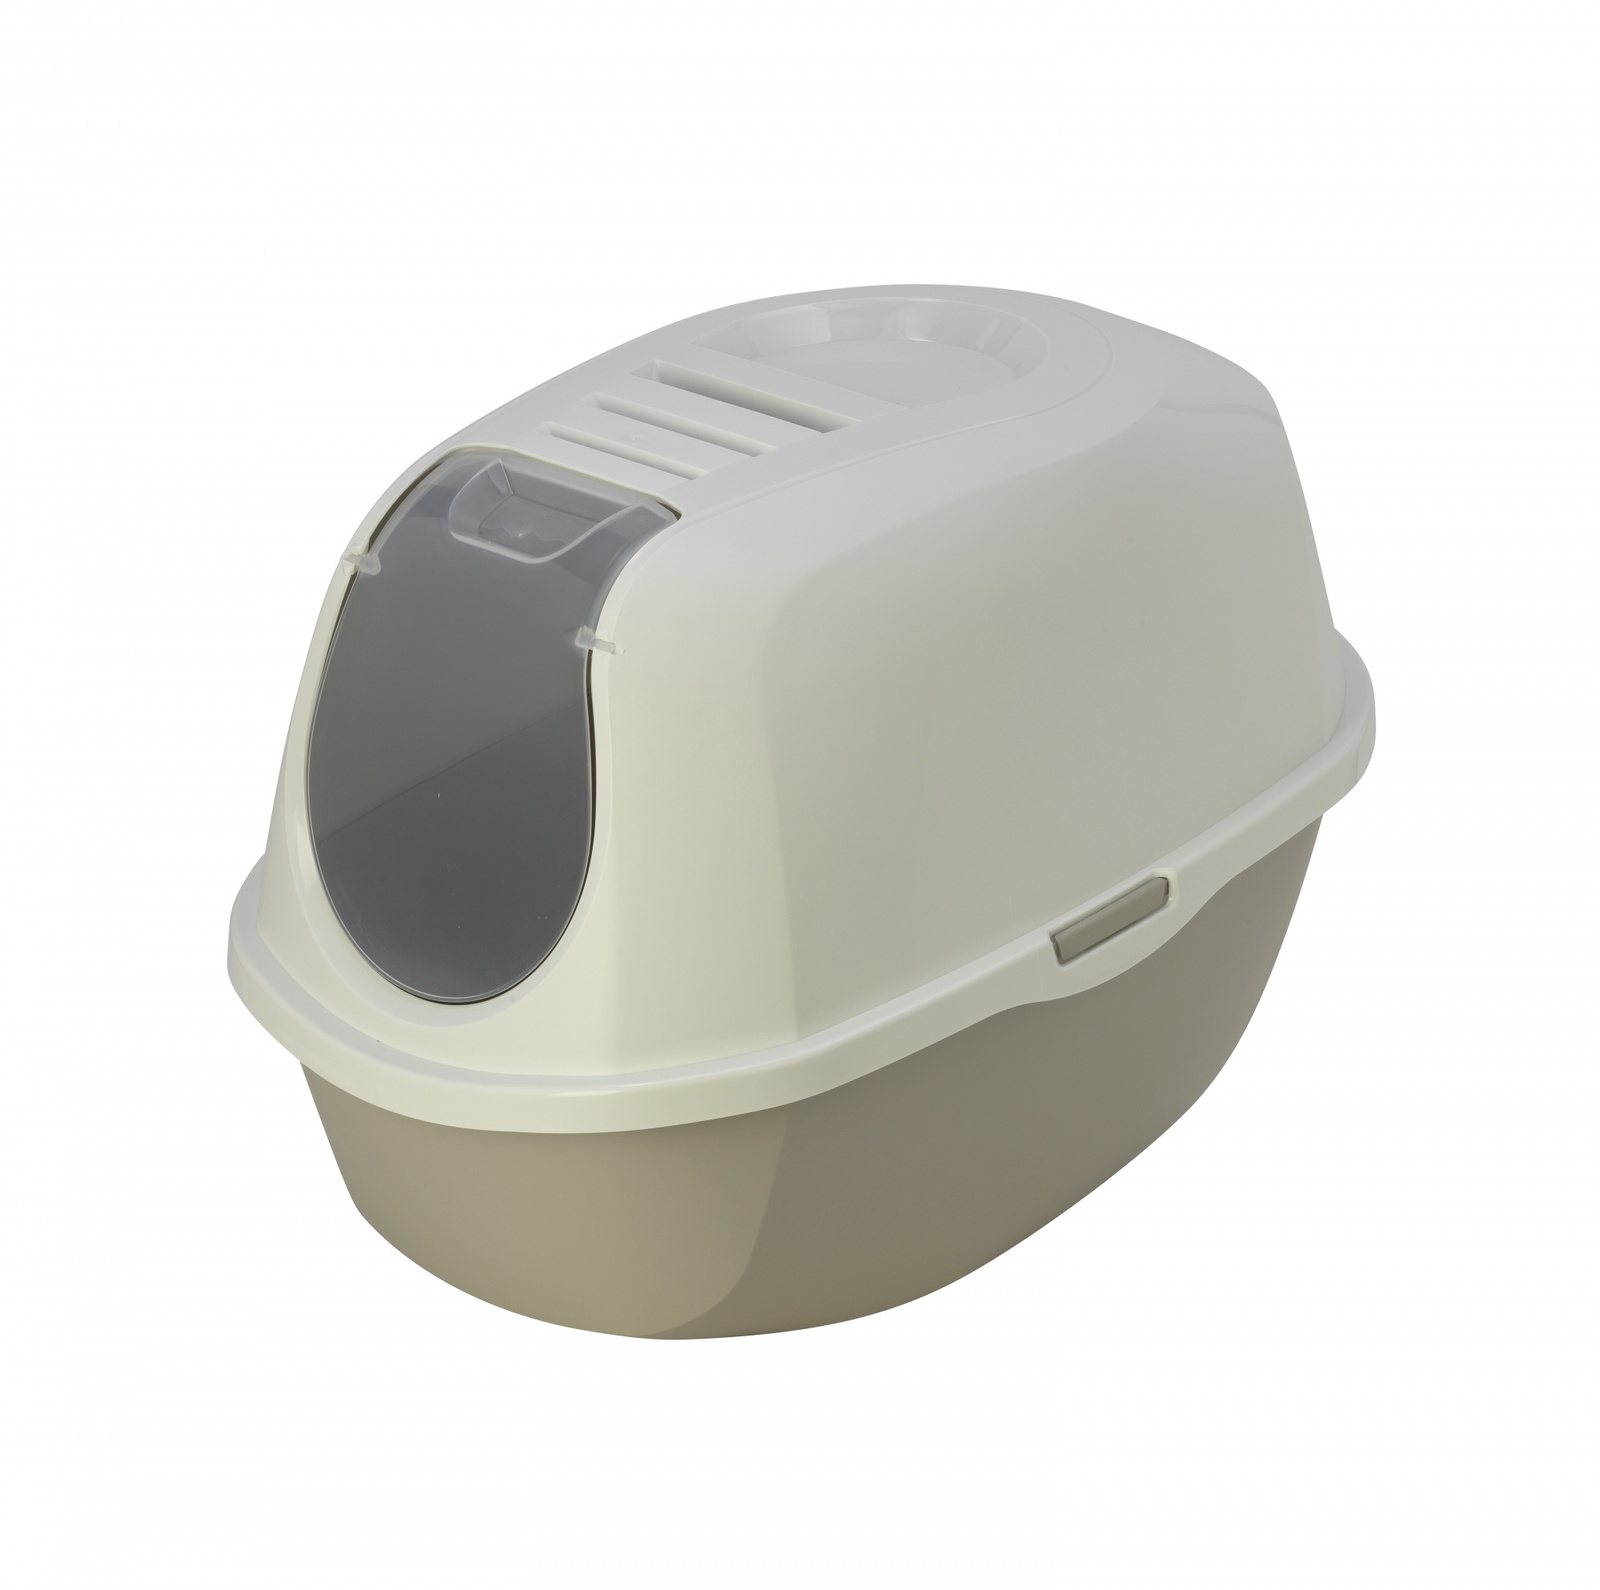 Moderna Moderna туалет-домик SmartCat с угольным фильтром, 54х40х41см, теплый серый (1,2 кг) moderna moderna туалет домик smartcat с угольным фильтром 54х40х41см теплый серый 1 2 кг